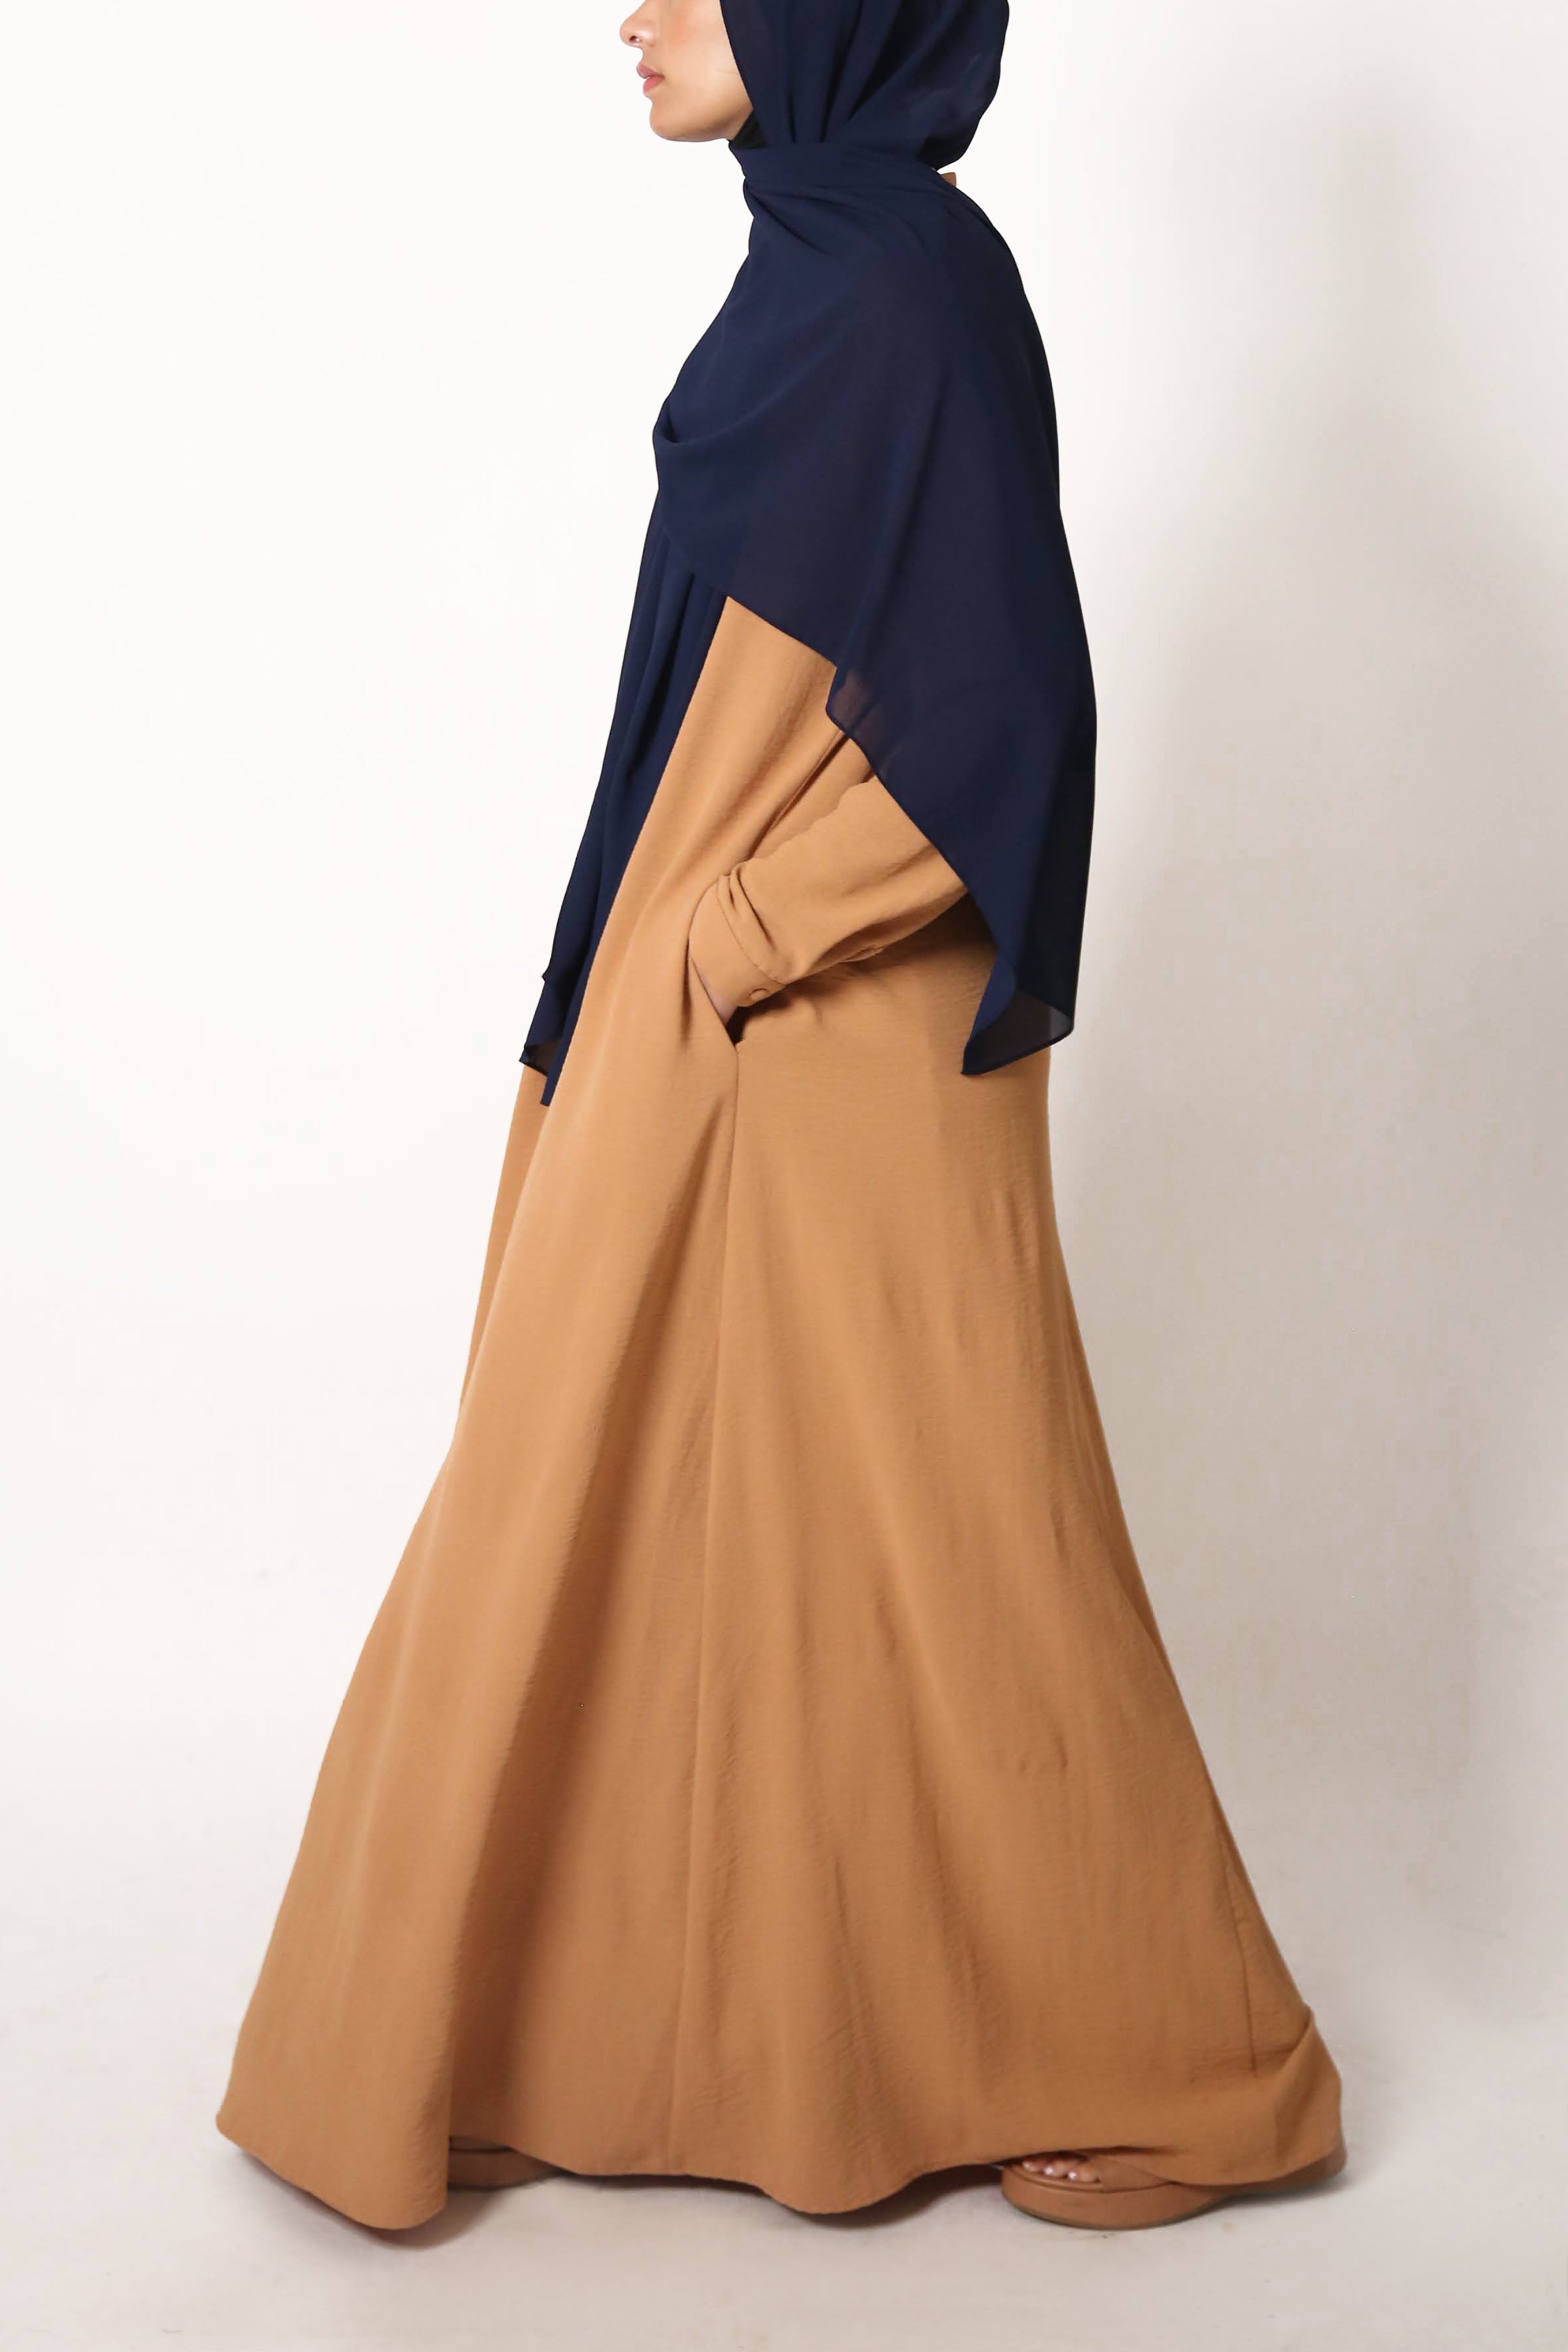 Camel Tan Button Front Crinkle Abaya